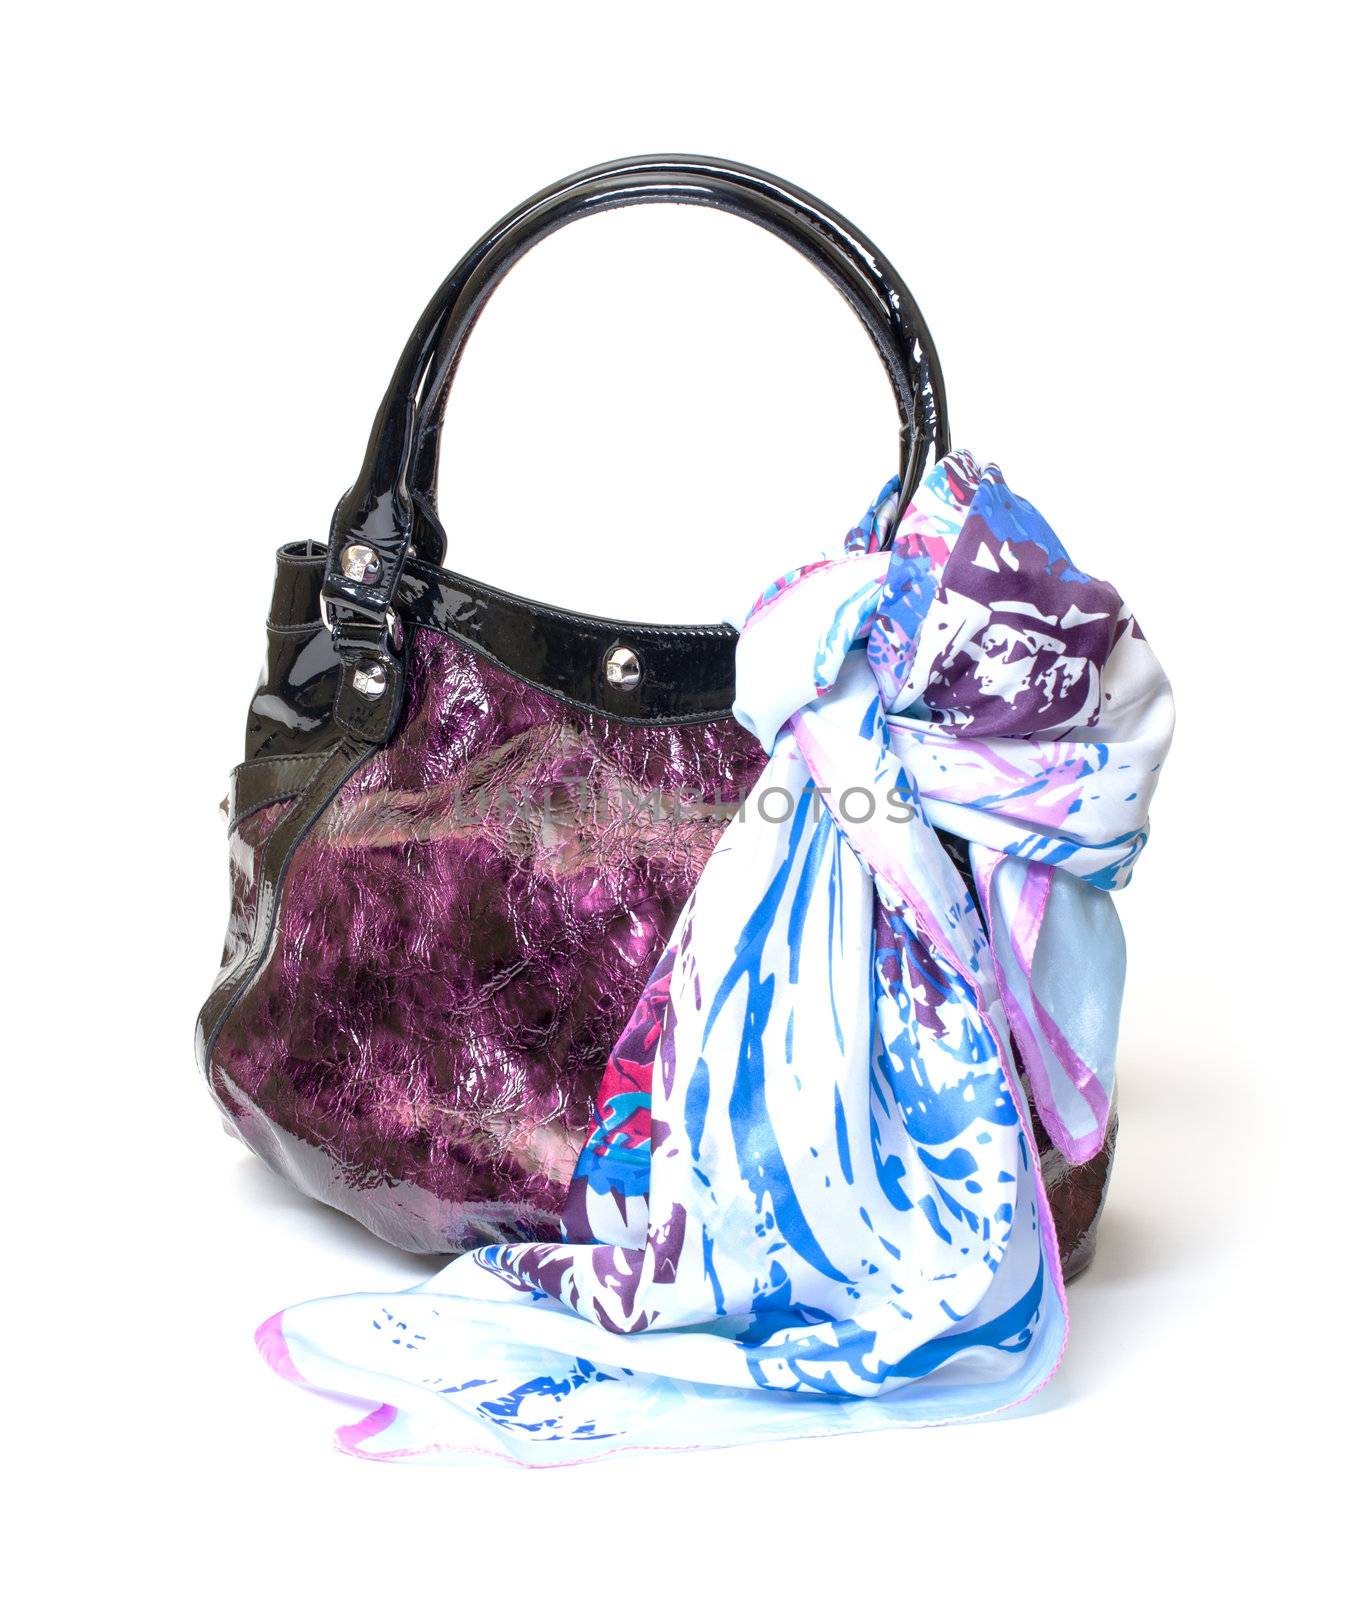 Vibrant Leather Ladies Handbag with Handkerchief on white background